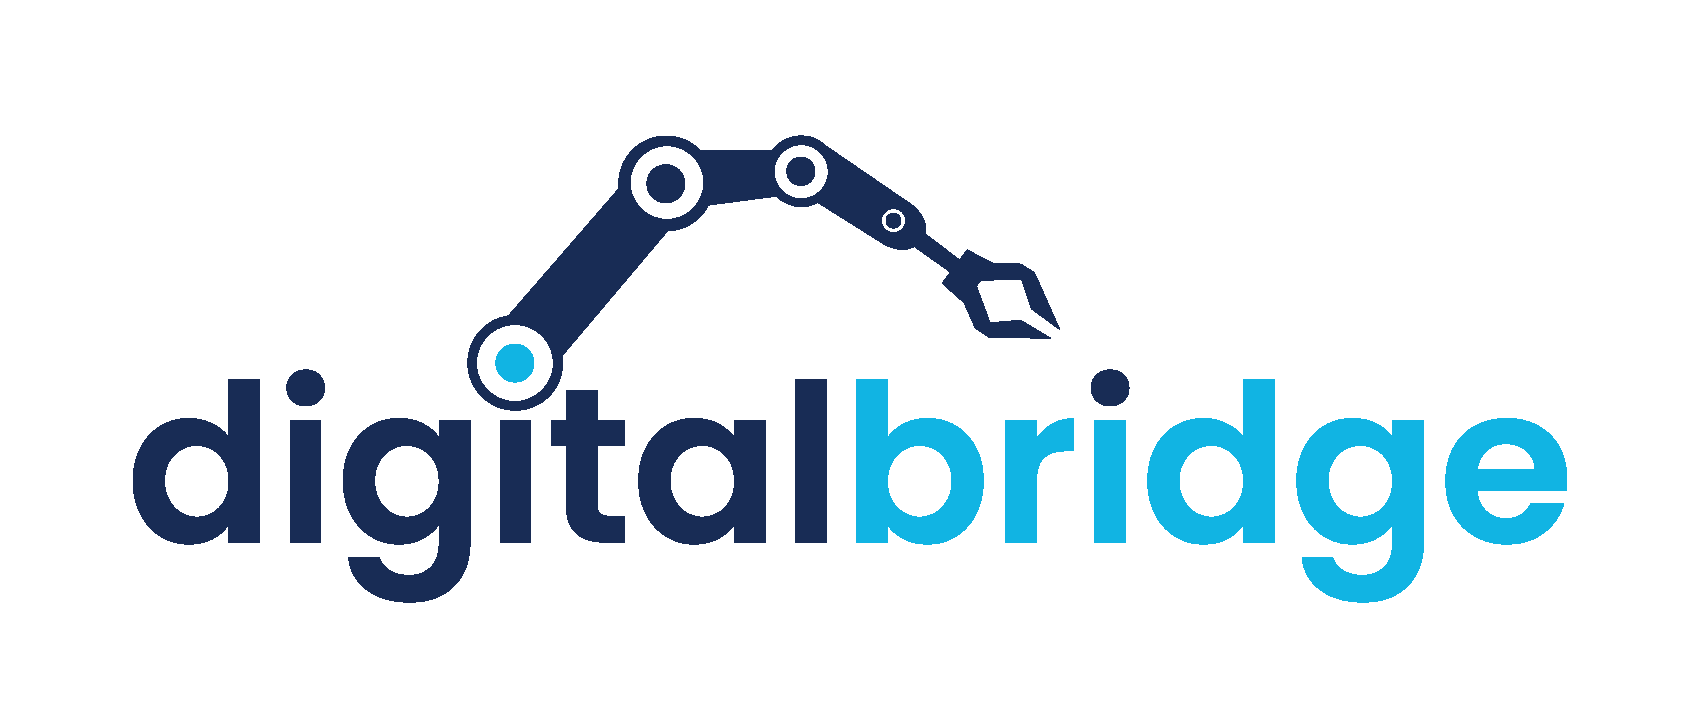 Digital Bridge Logo